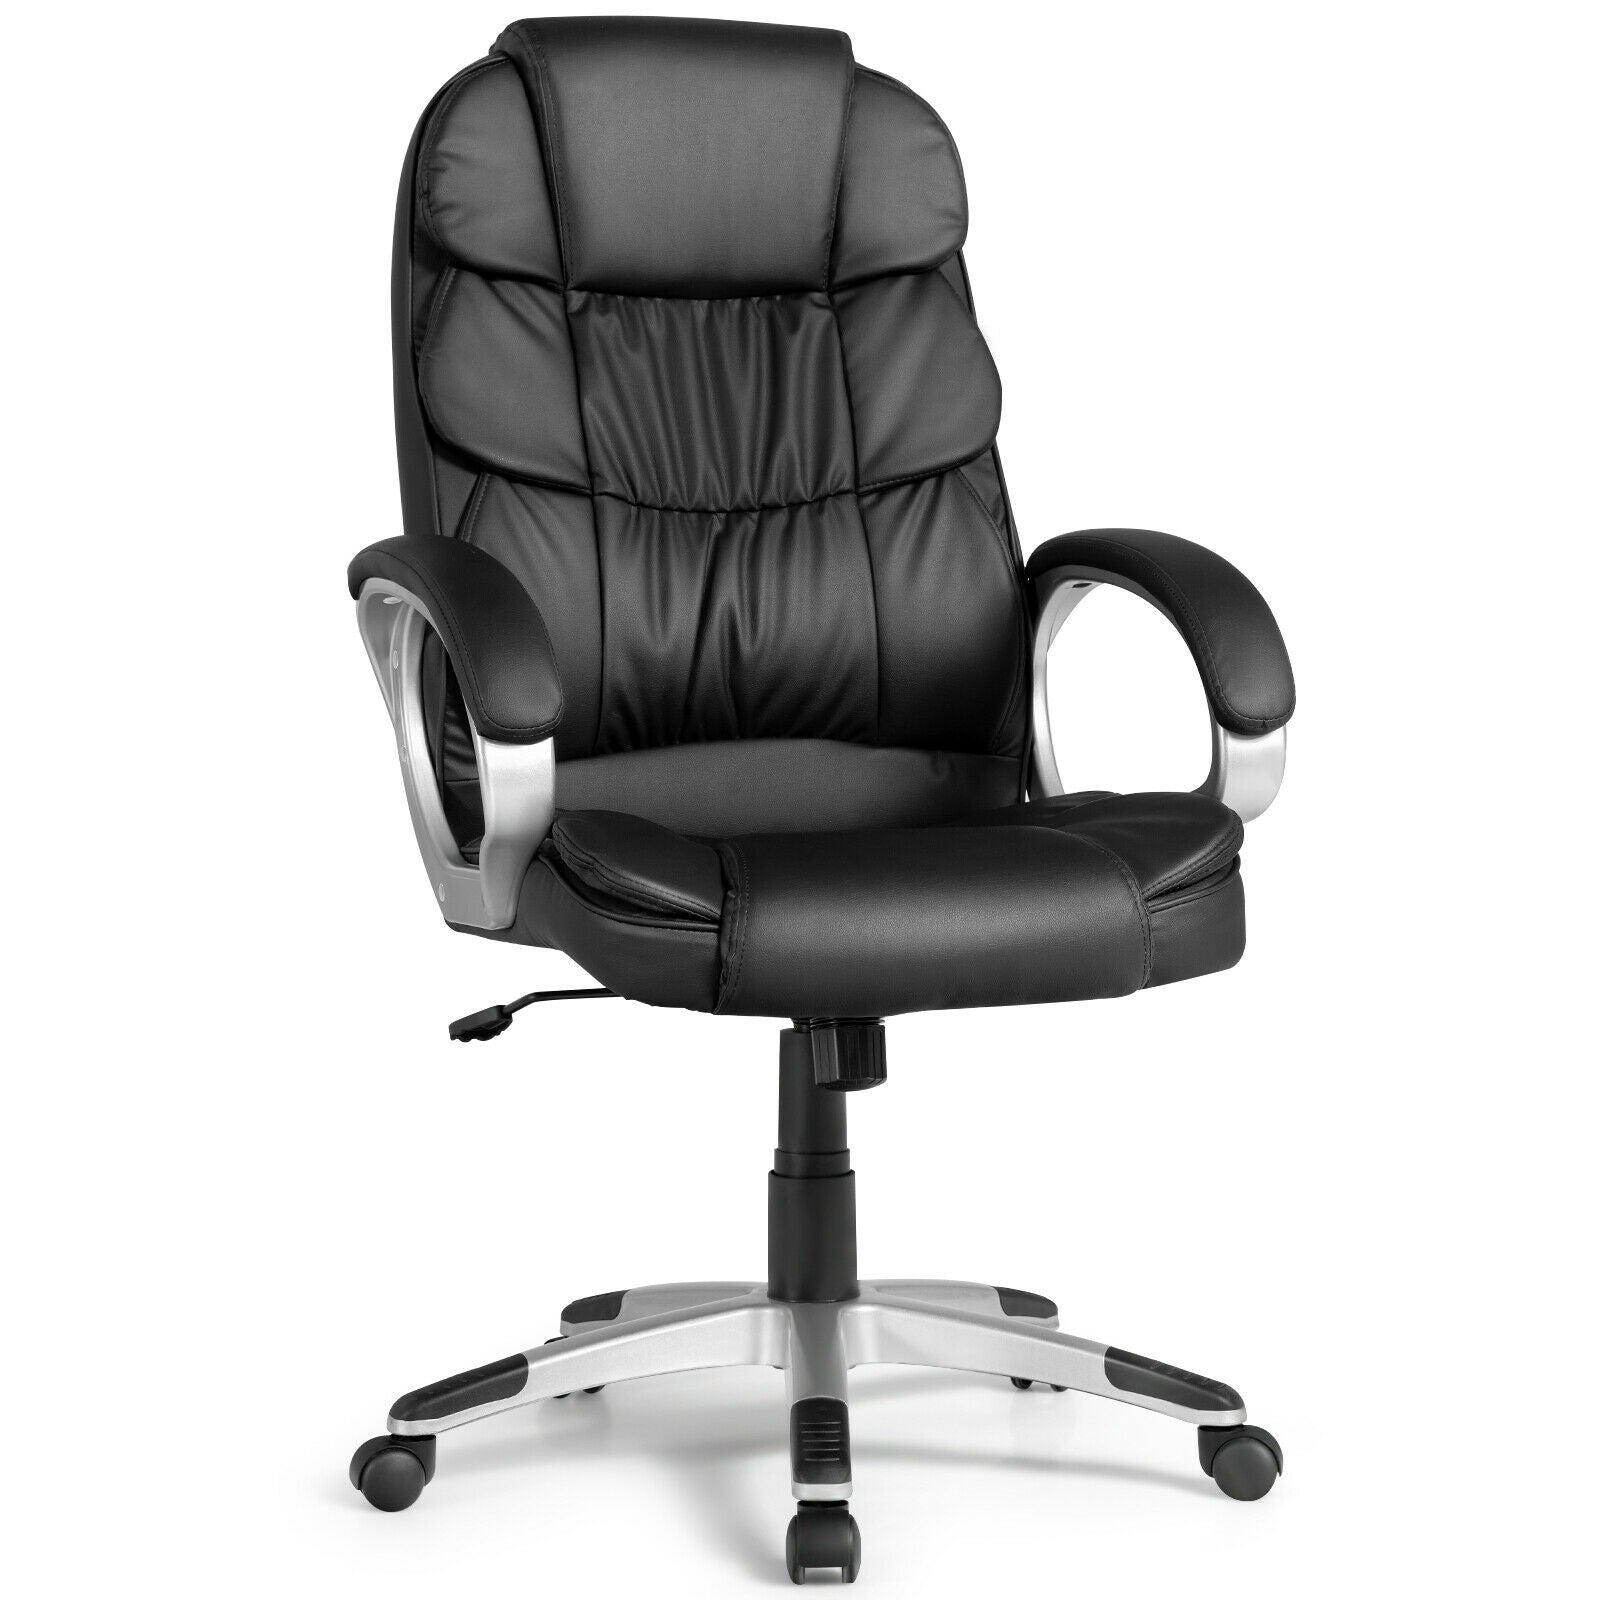 Giantex Executive Office chair w/ Padded Lumbar Pillow, Big and Tall Ergonomic Desk Chair(Black)